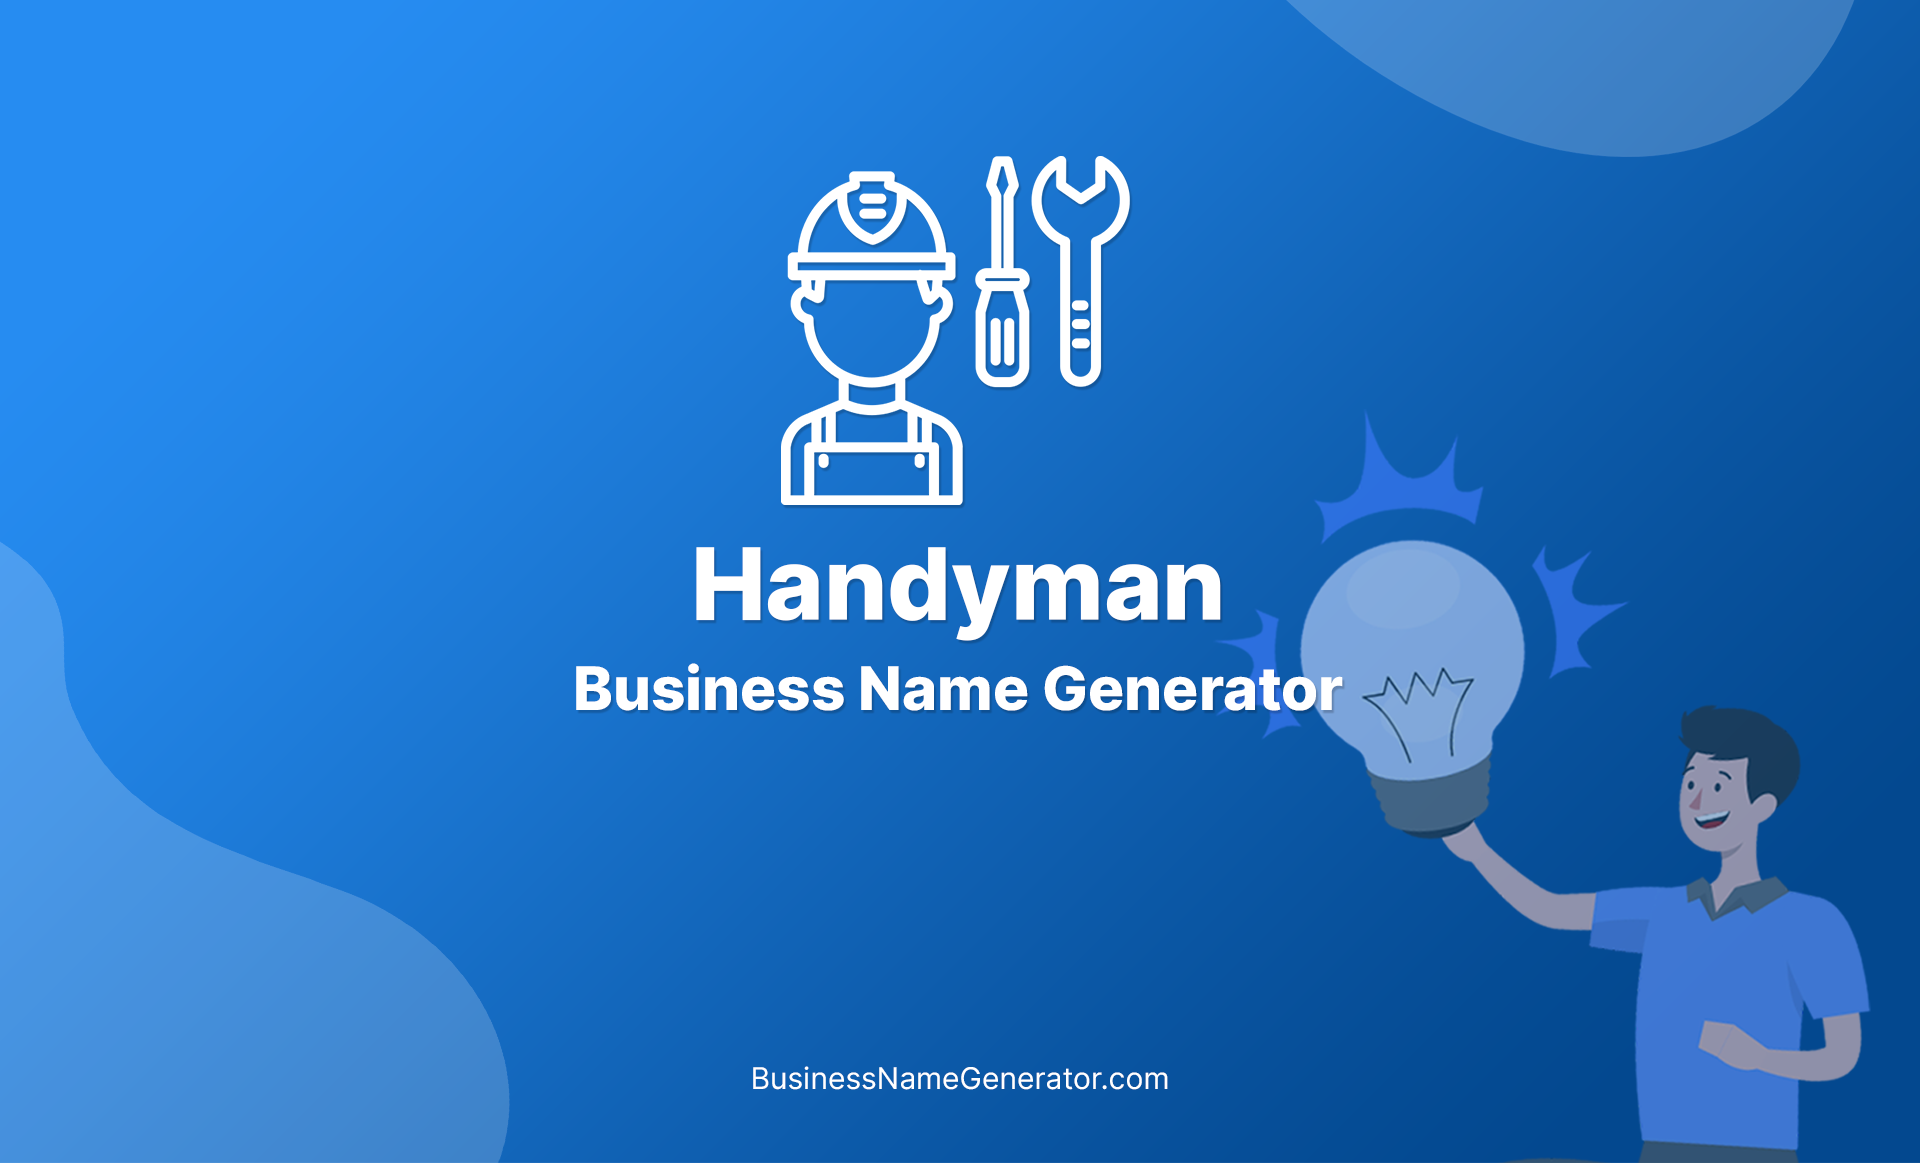 Handyman Business Name Generator